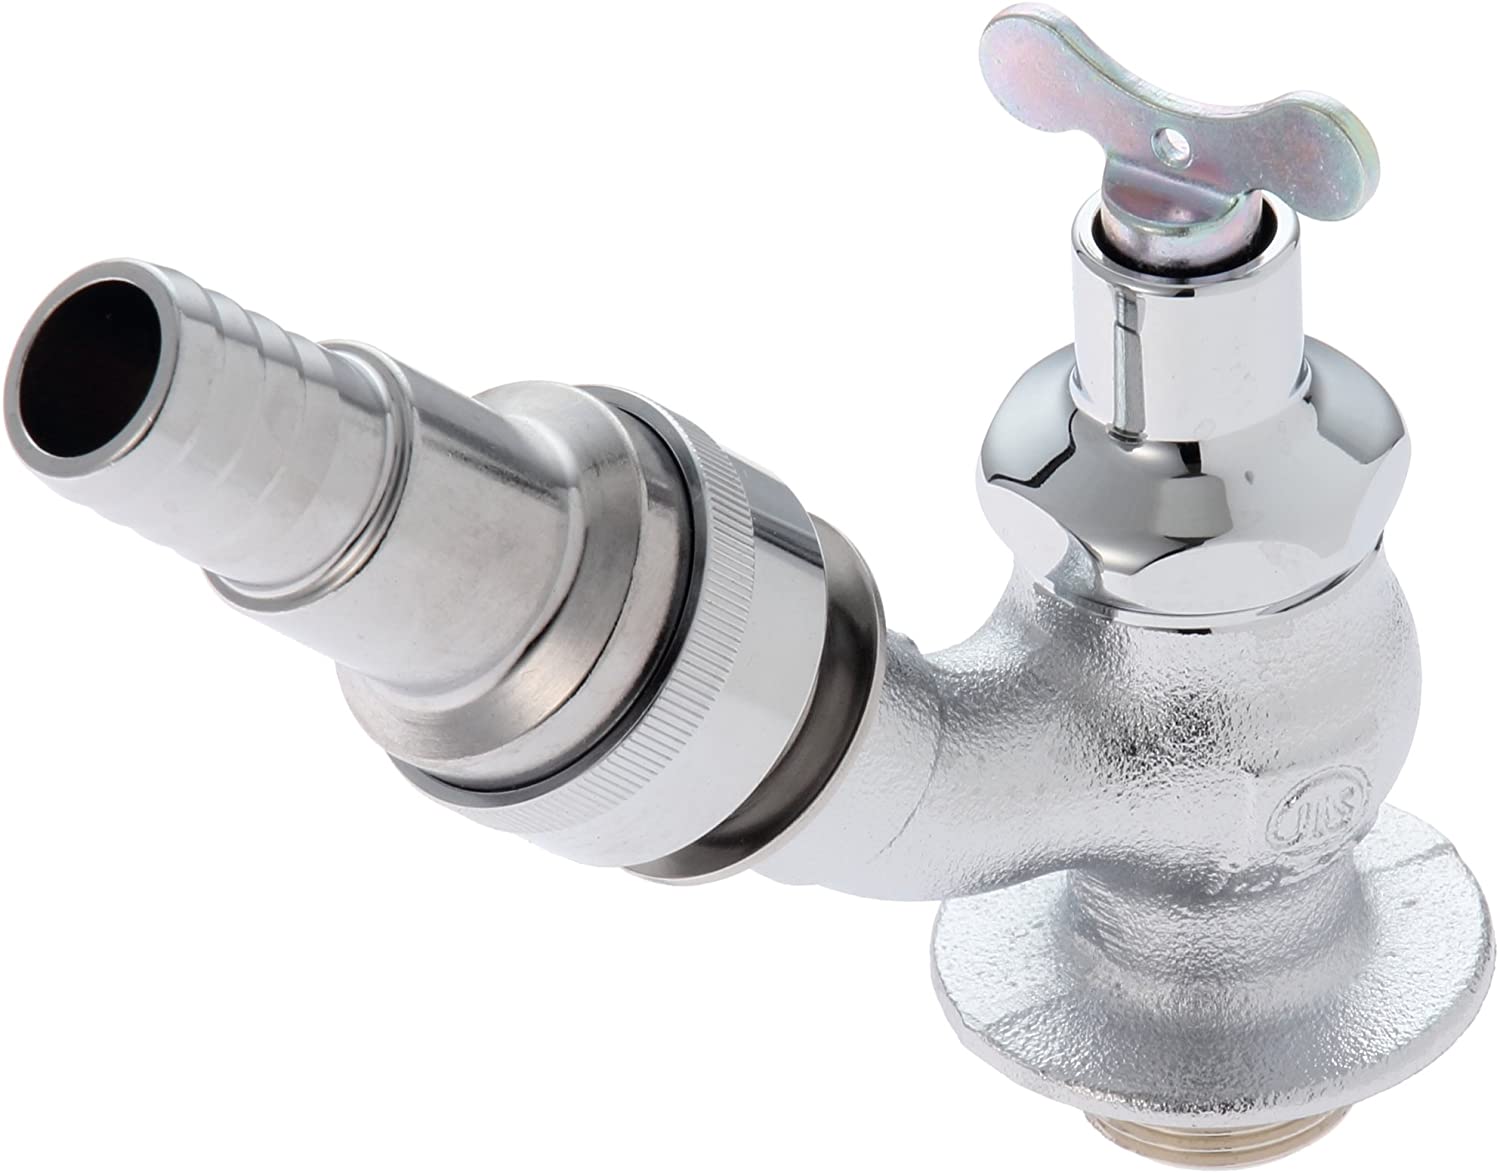 bathbath 鍵付き 蛇口 ガーデニング キー付き 水栓 水道栓 水道 共用 万能 いたずら 防止 対策 盗水 安全 通販 